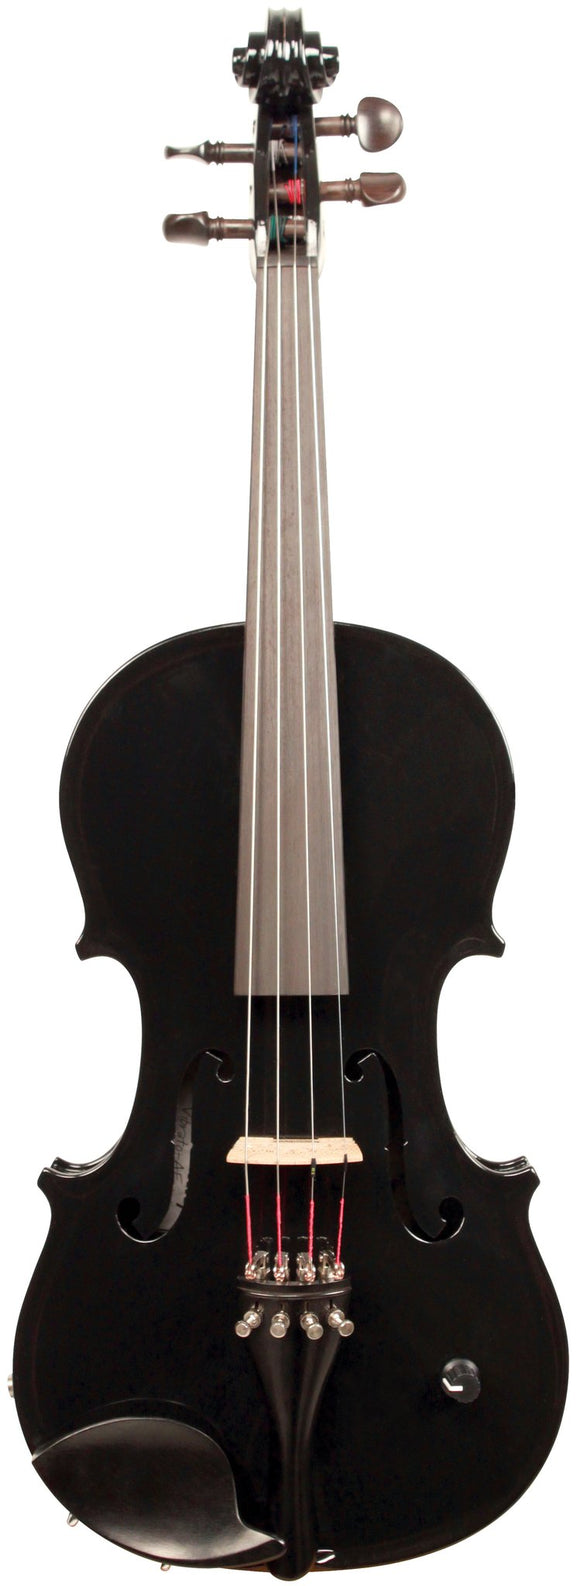 Barcus Berry Vibrato AE Series Acoustic-Electric Violin - Piano Black / Blue / White to Black